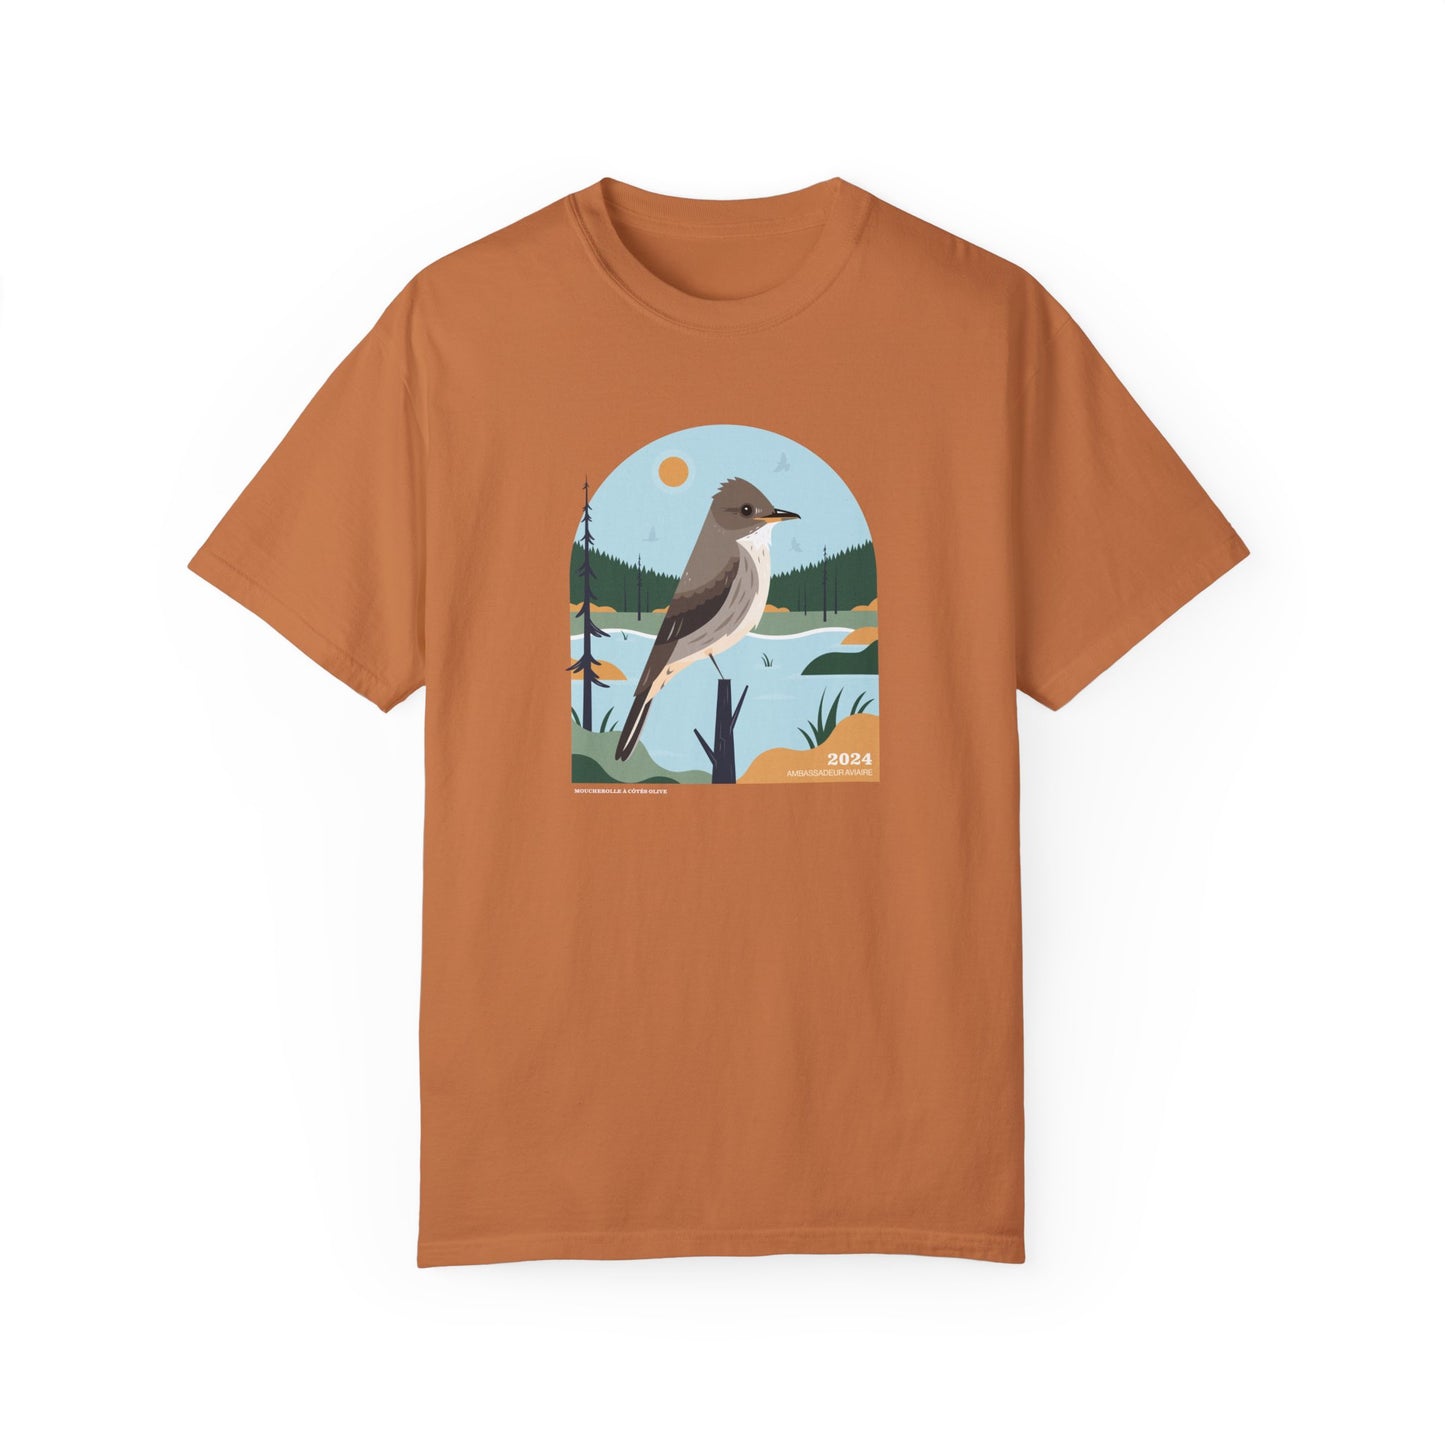 T-shirt Birdathon 2024 - Français